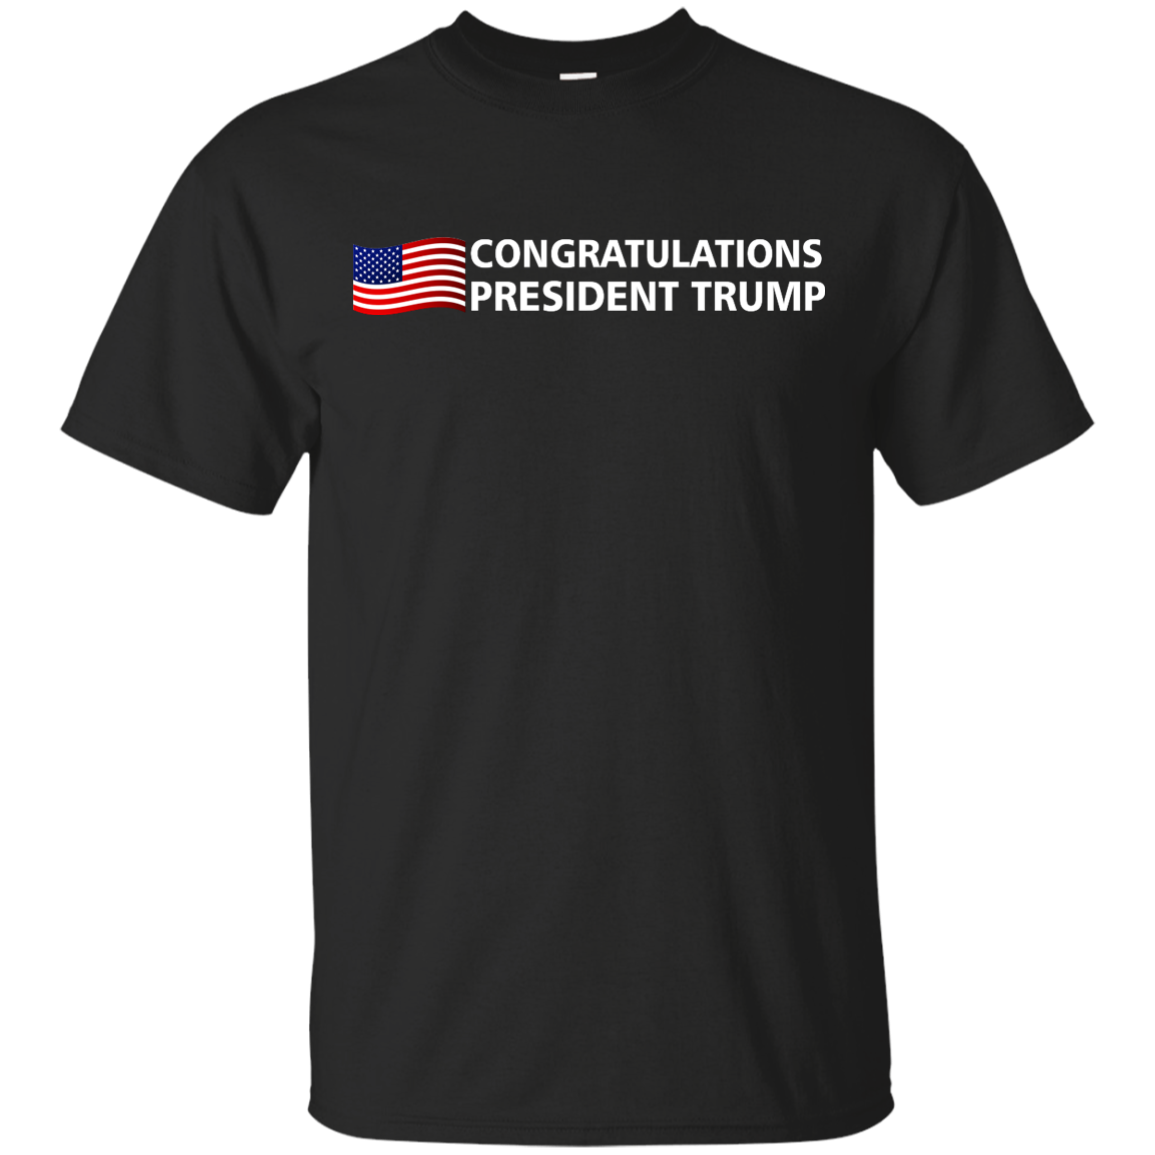 Congratulations president Trump shirt, hoodie, tank - ifrogtees